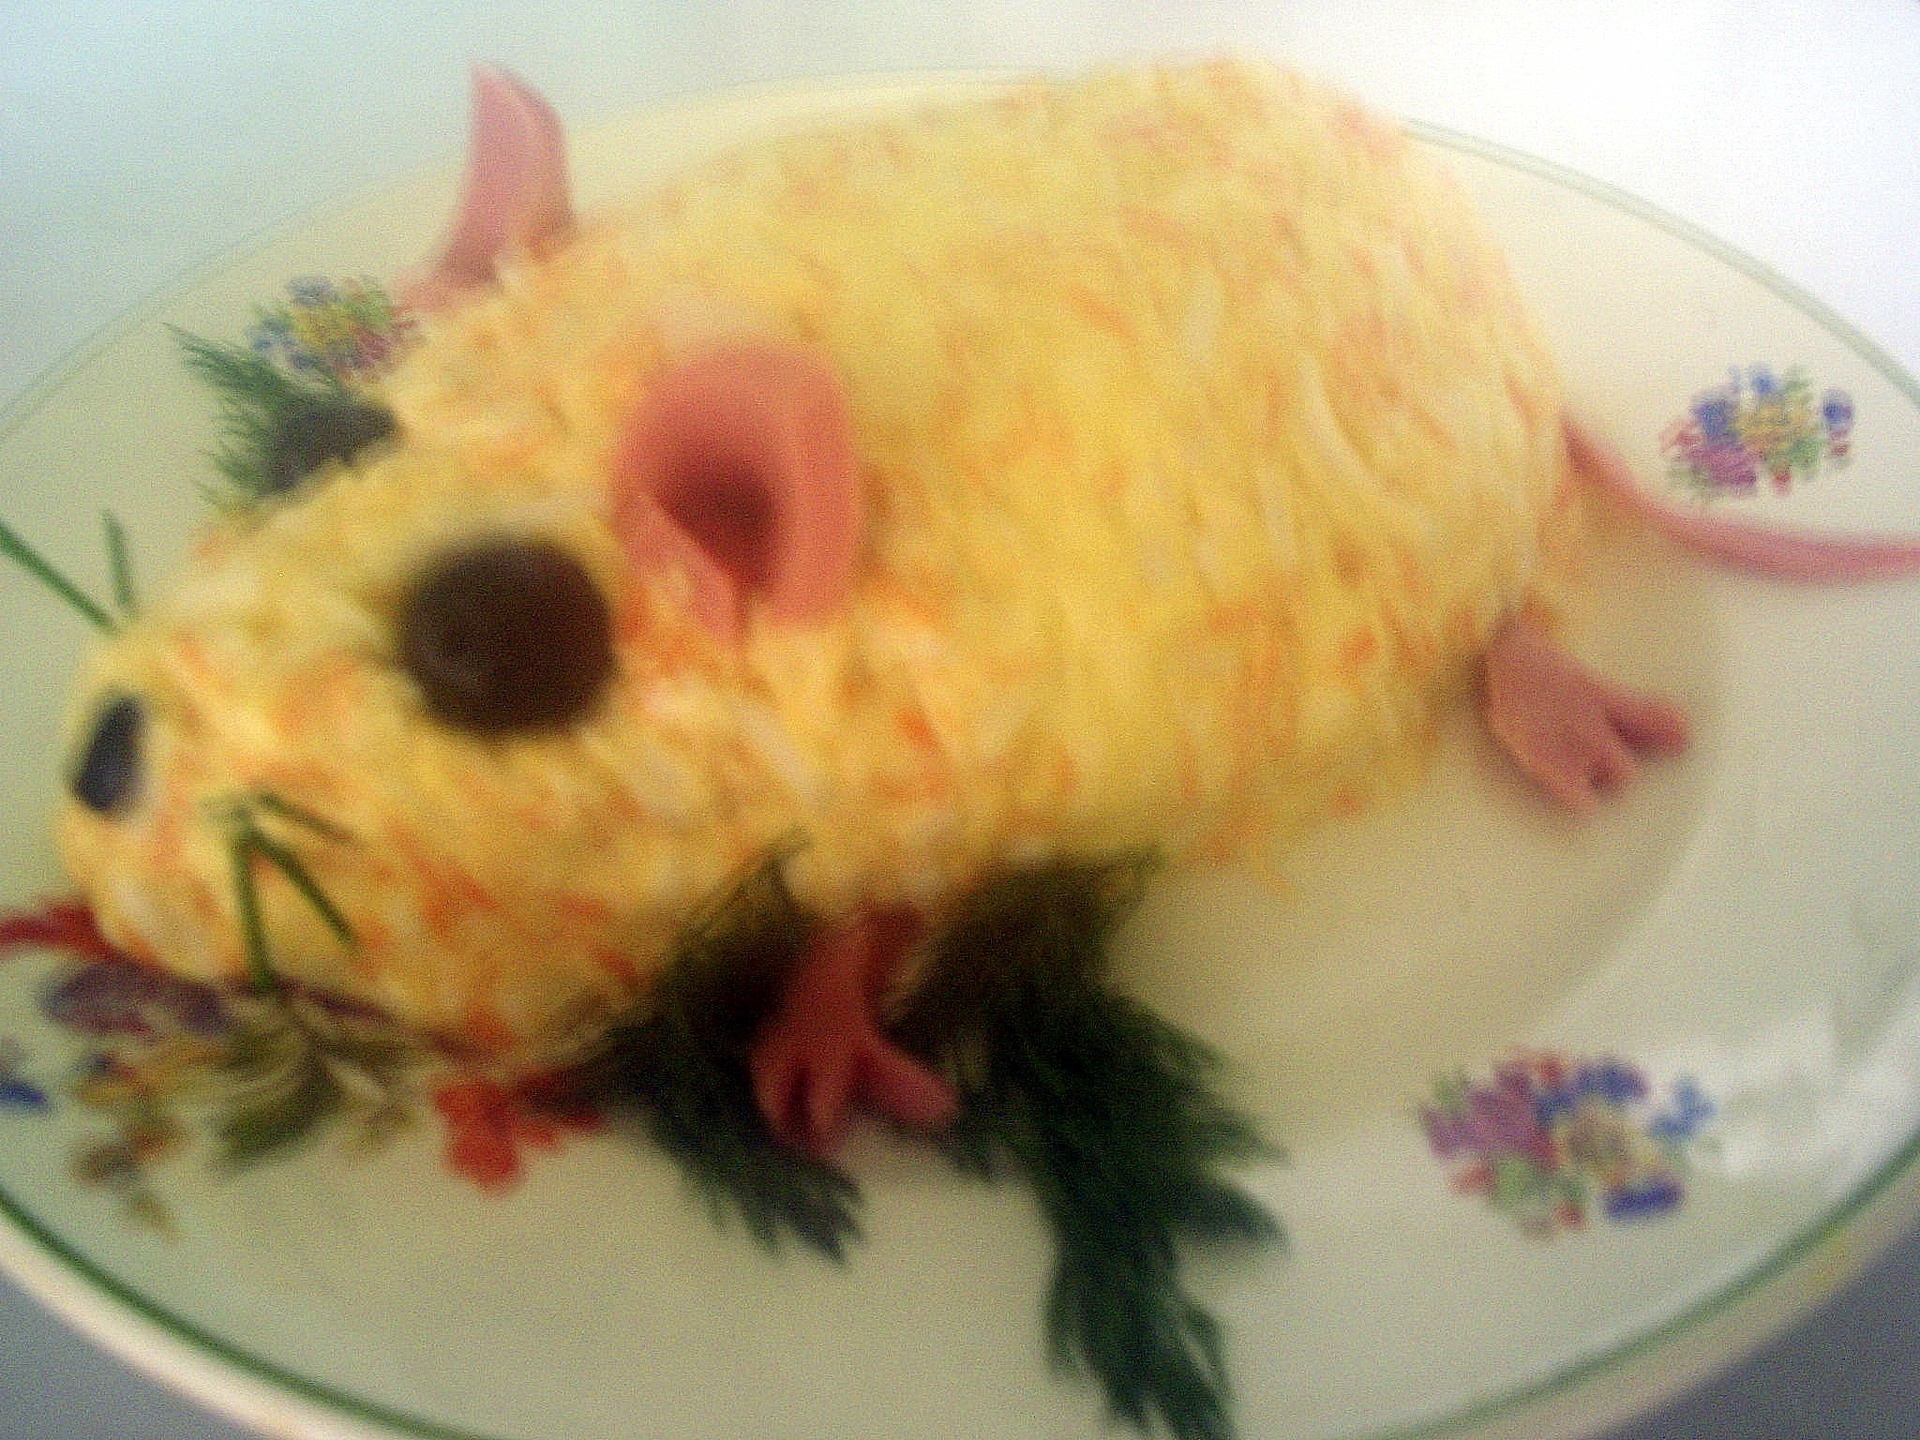 Салат мышка рецепт с фото